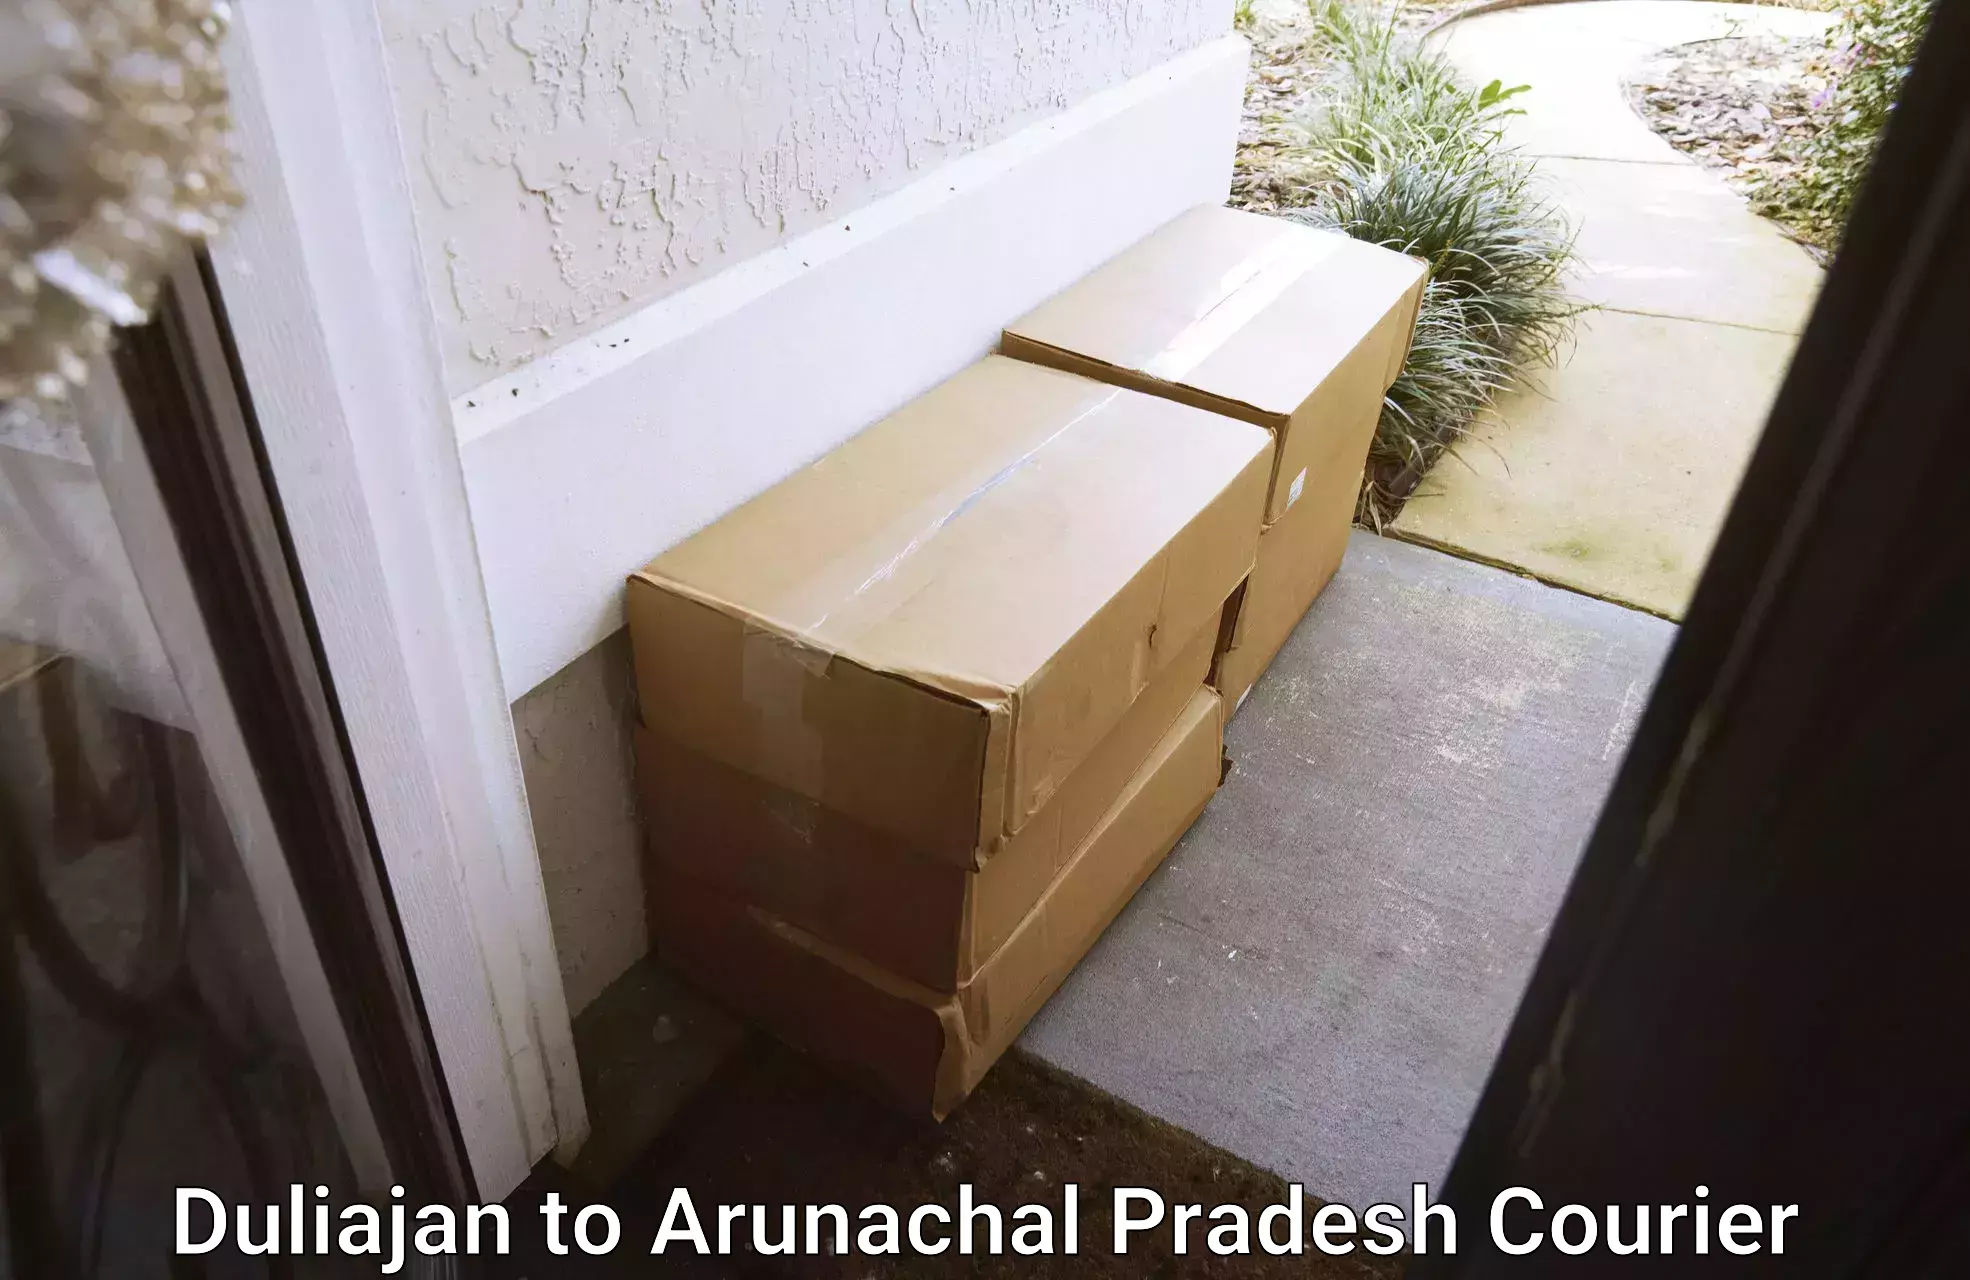 High-speed parcel service Duliajan to Naharlagun